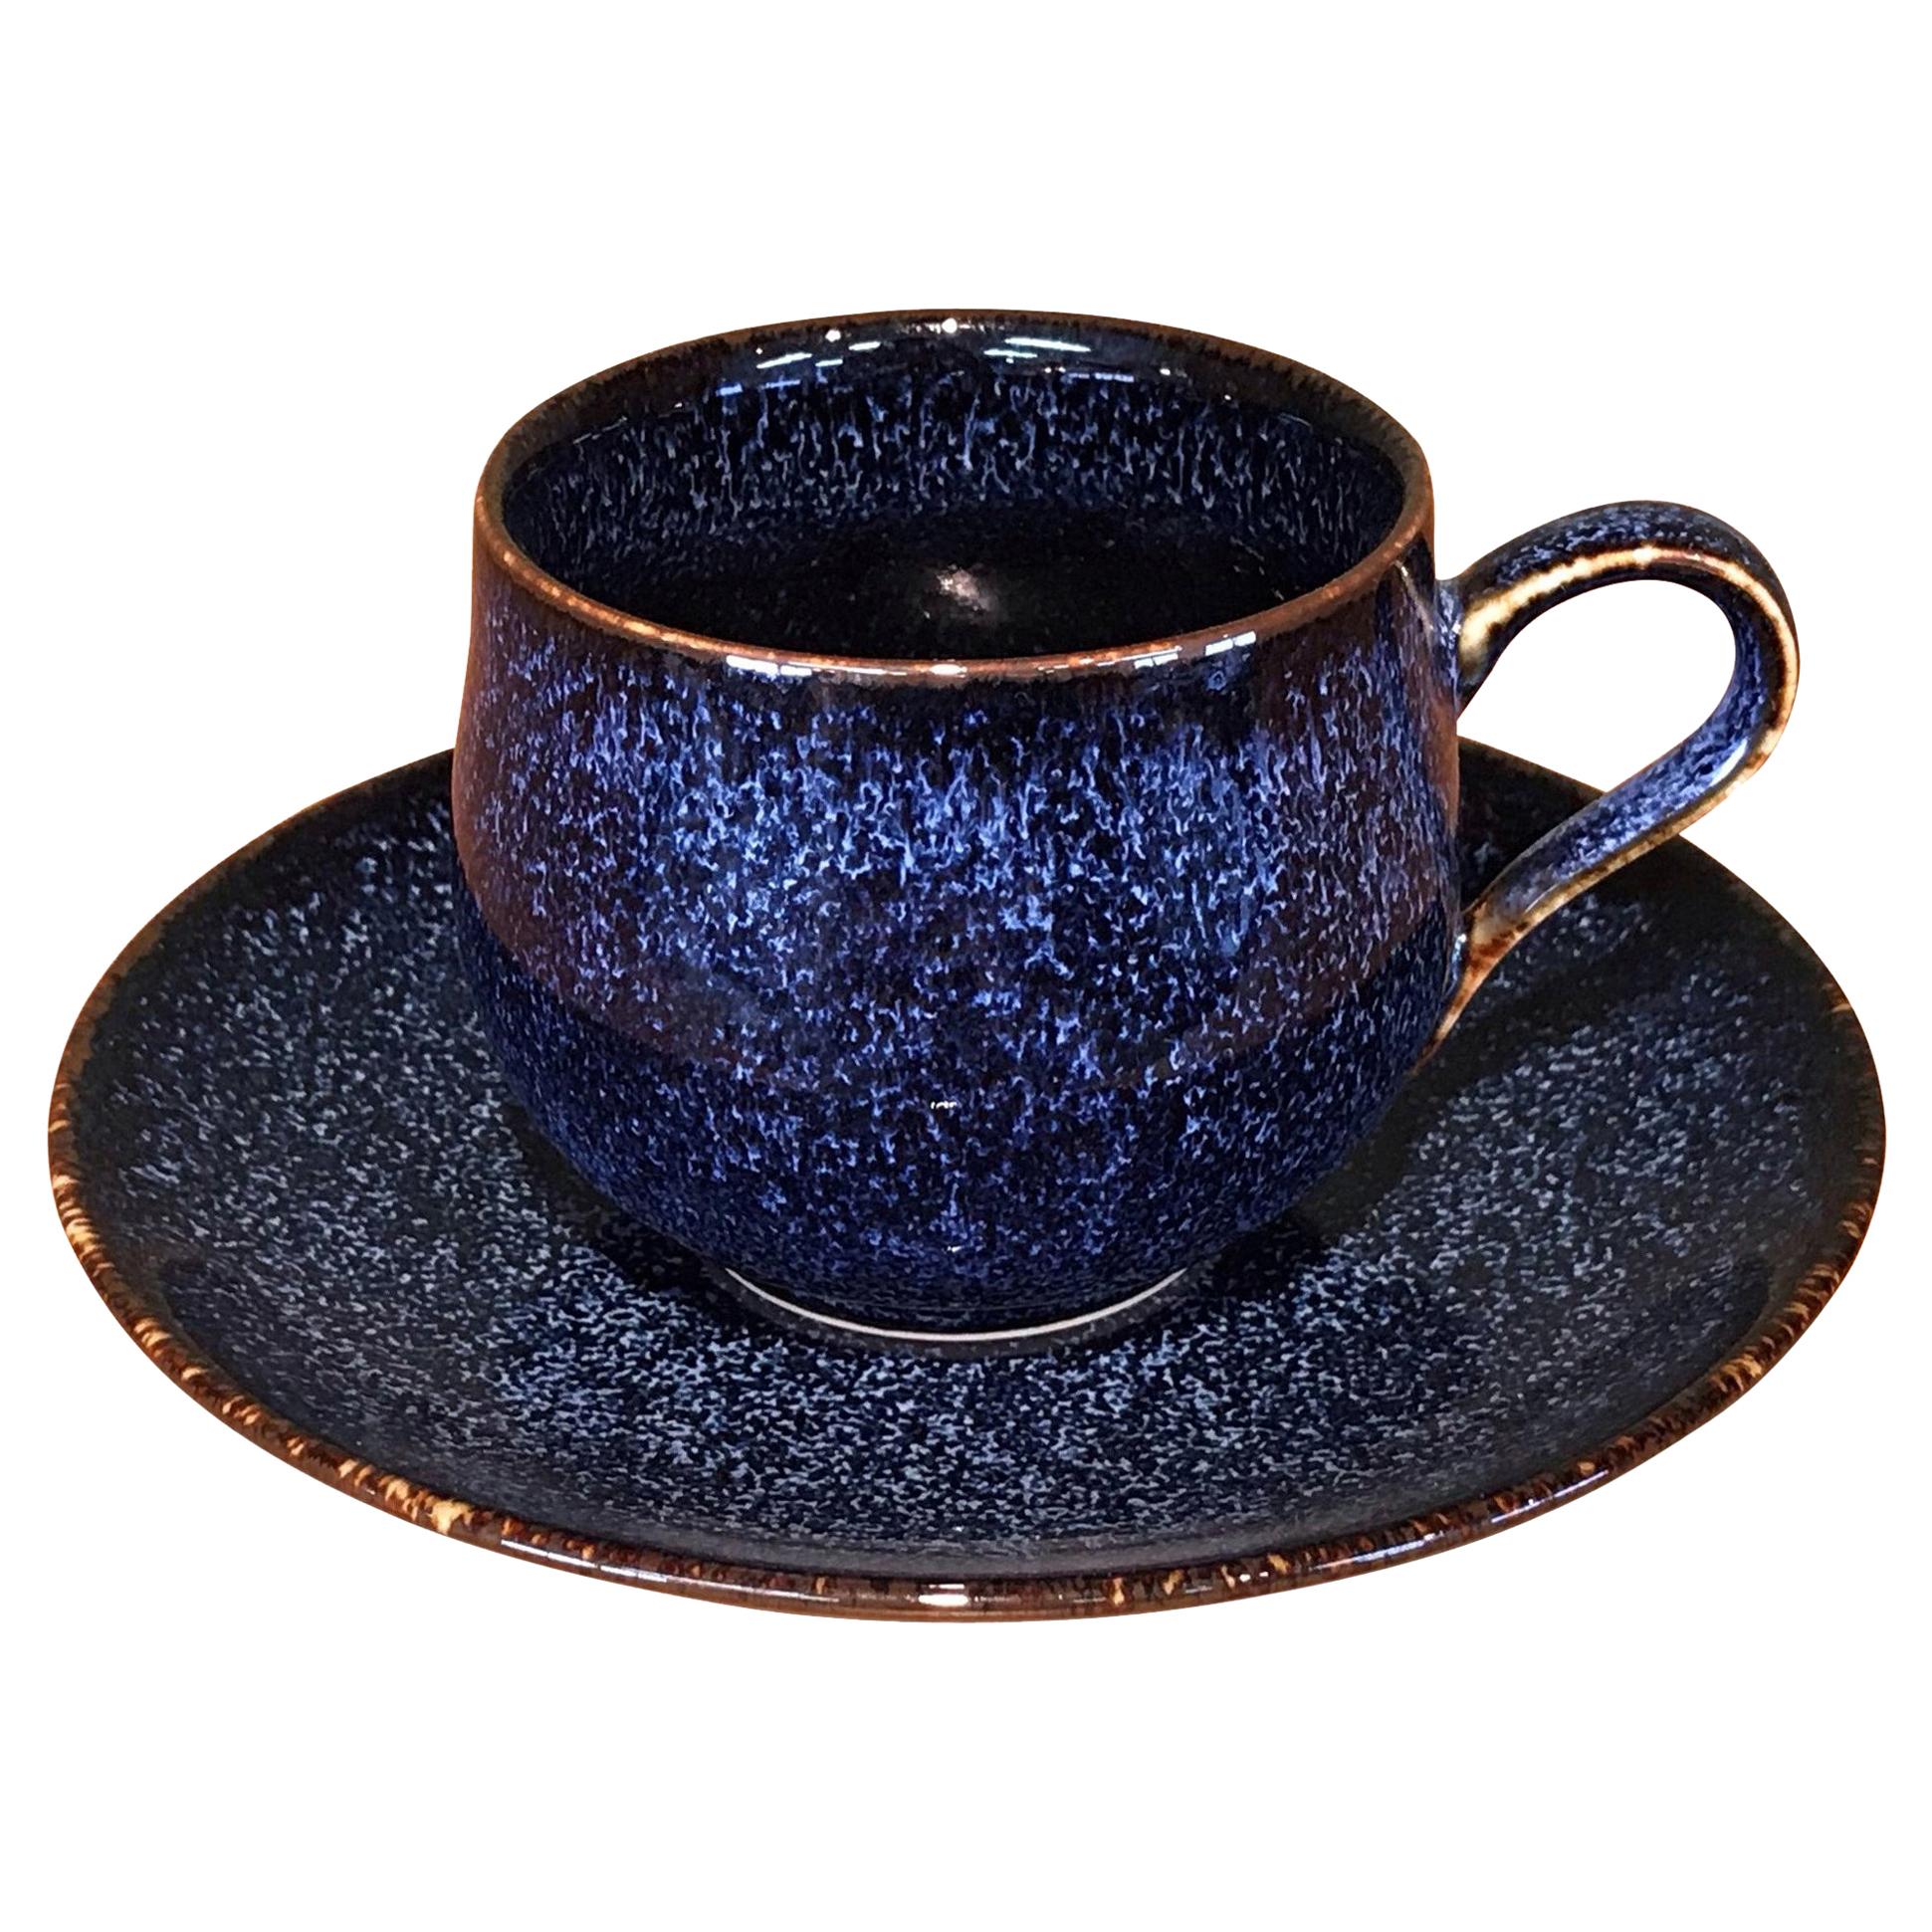 Japanese Blue Black Hand-Glazed Porcelain Cup and Saucer by Master Artist